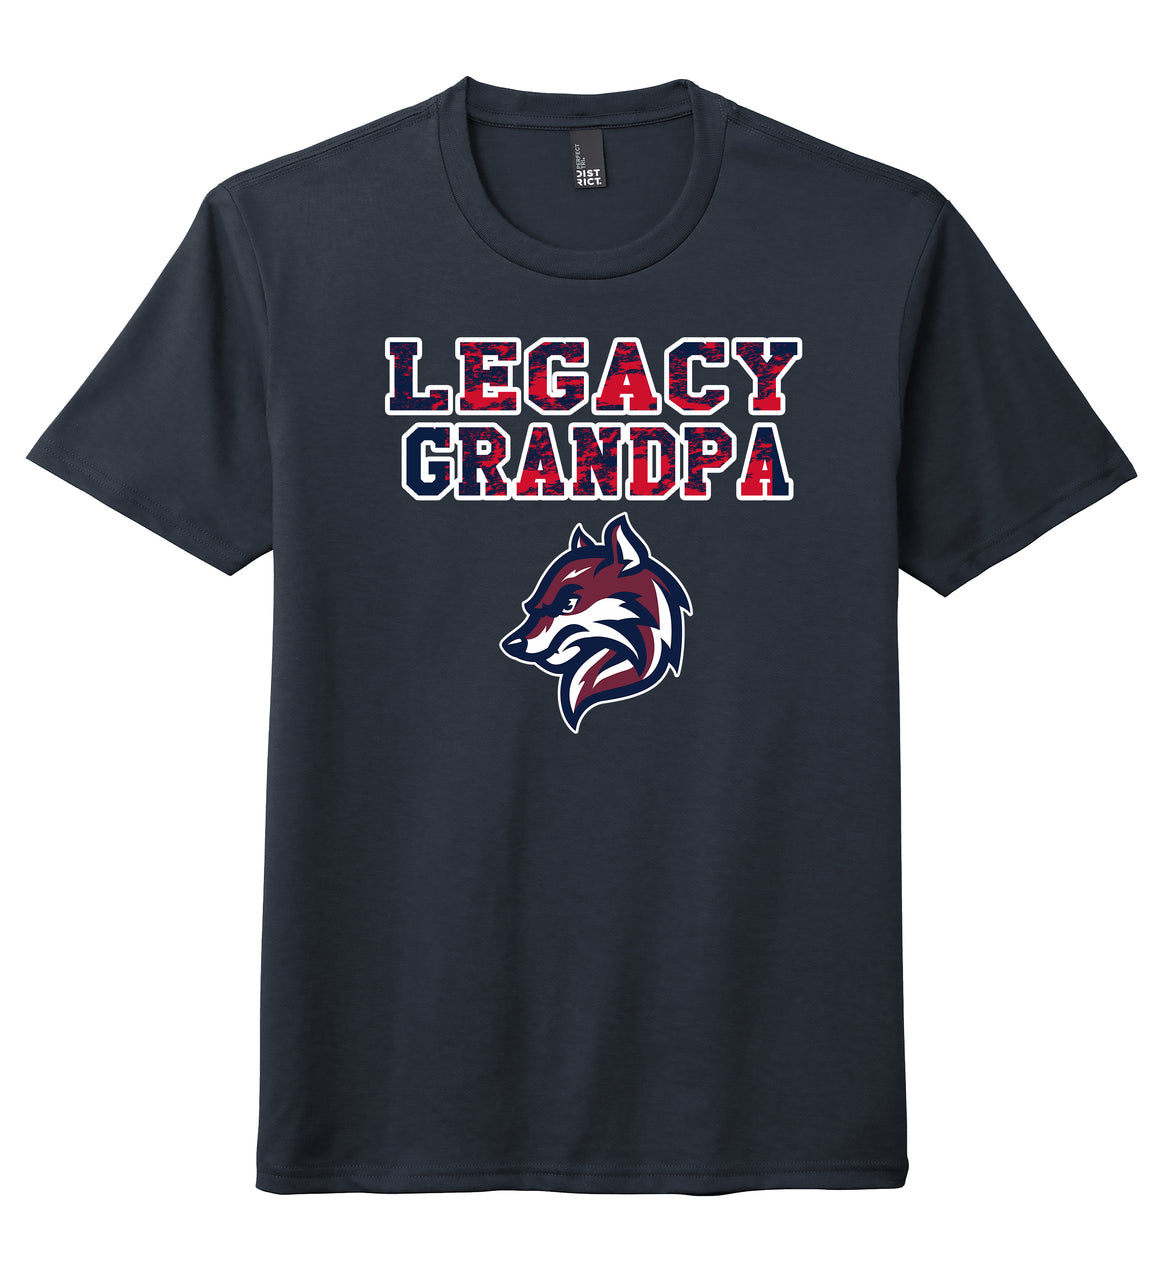 Legacy Traditional School Basse Secondary - Grandpa Shirt